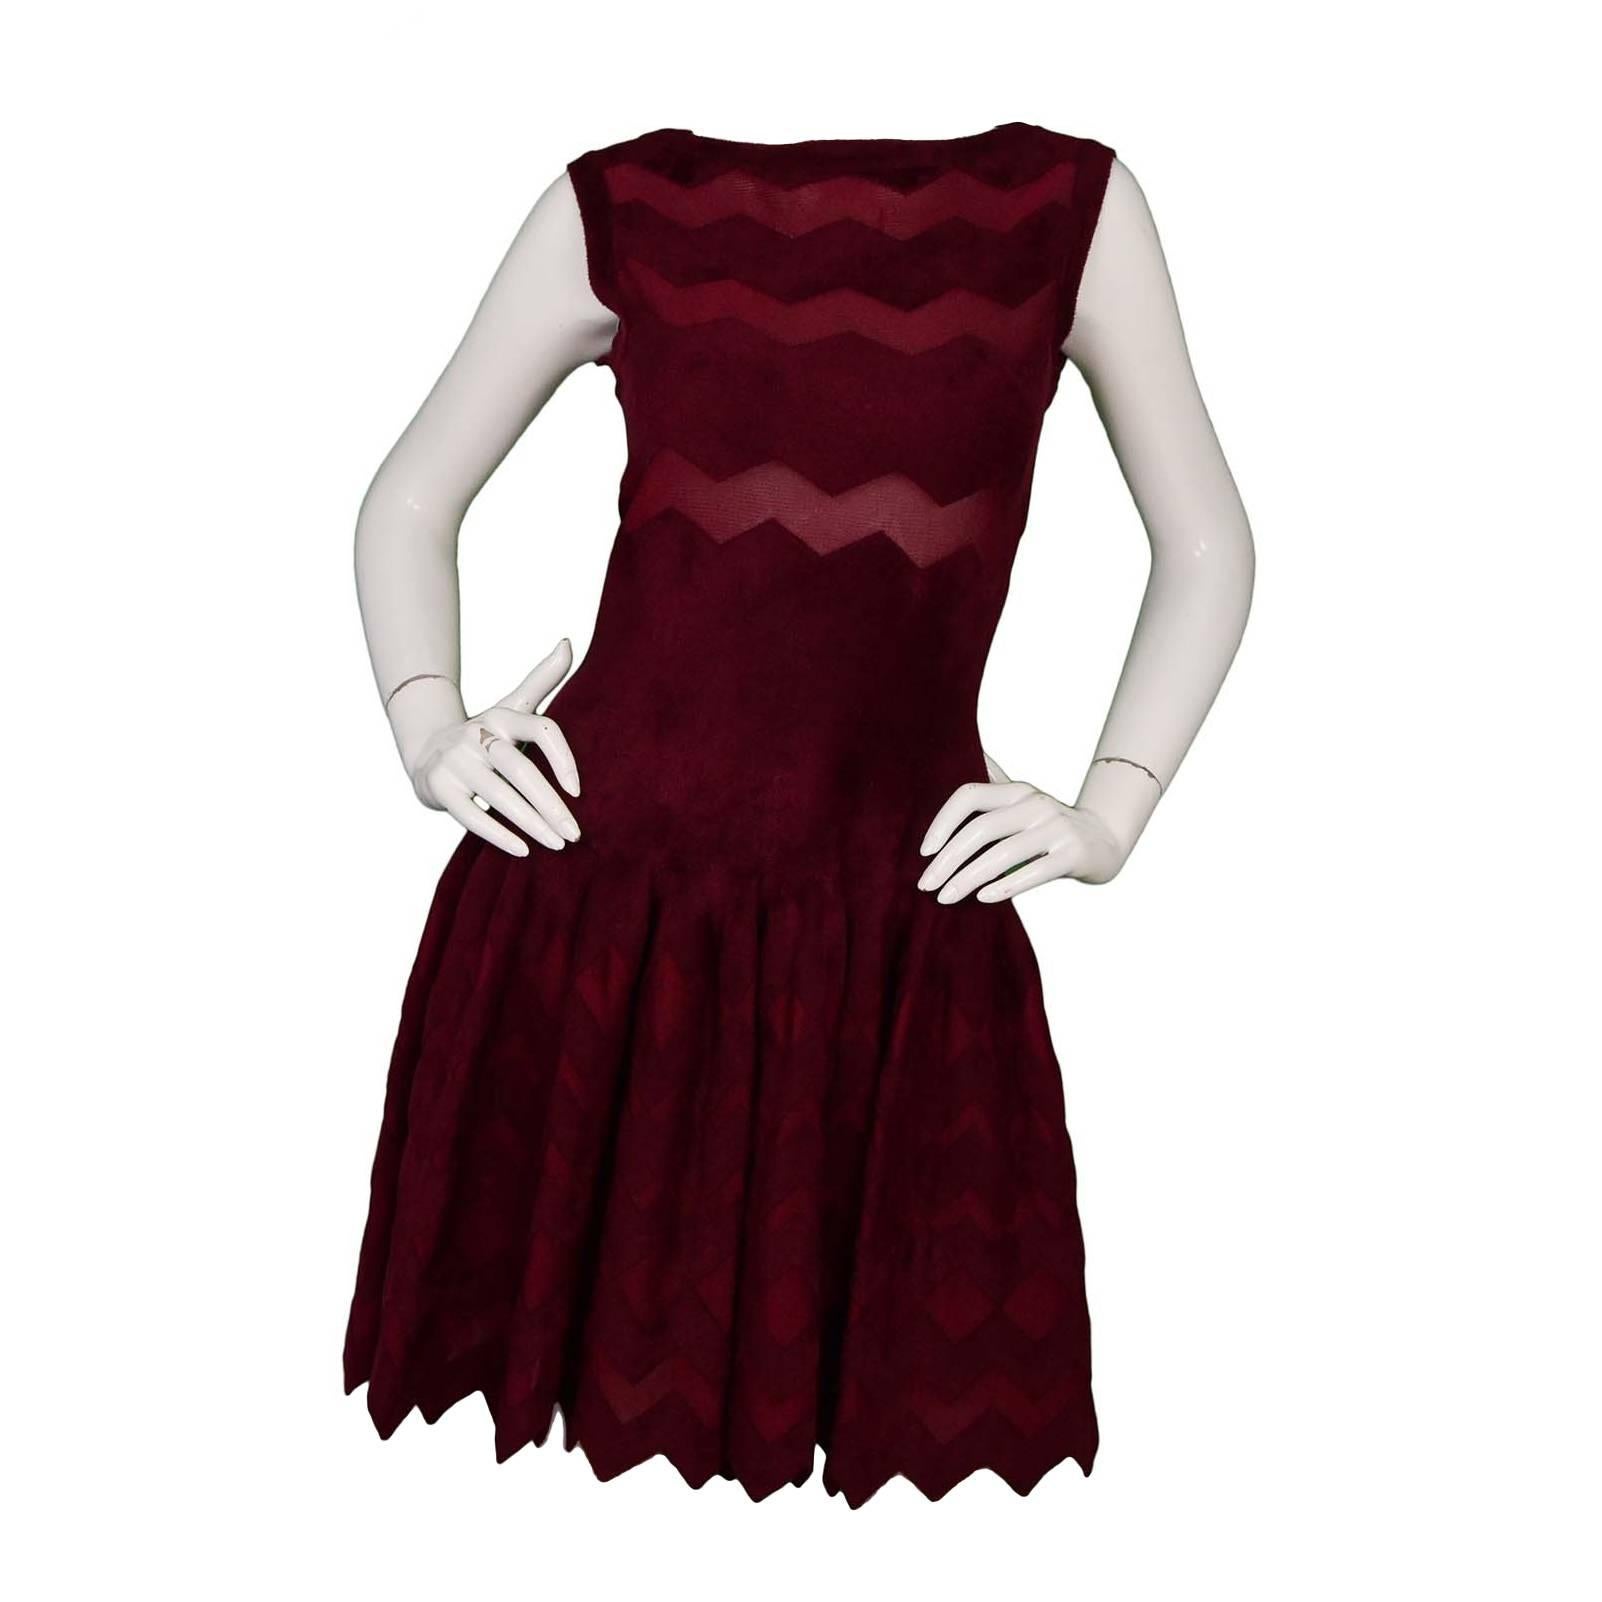 Alaia Burgundy Fit Flare Sleeveless Dress sz 40